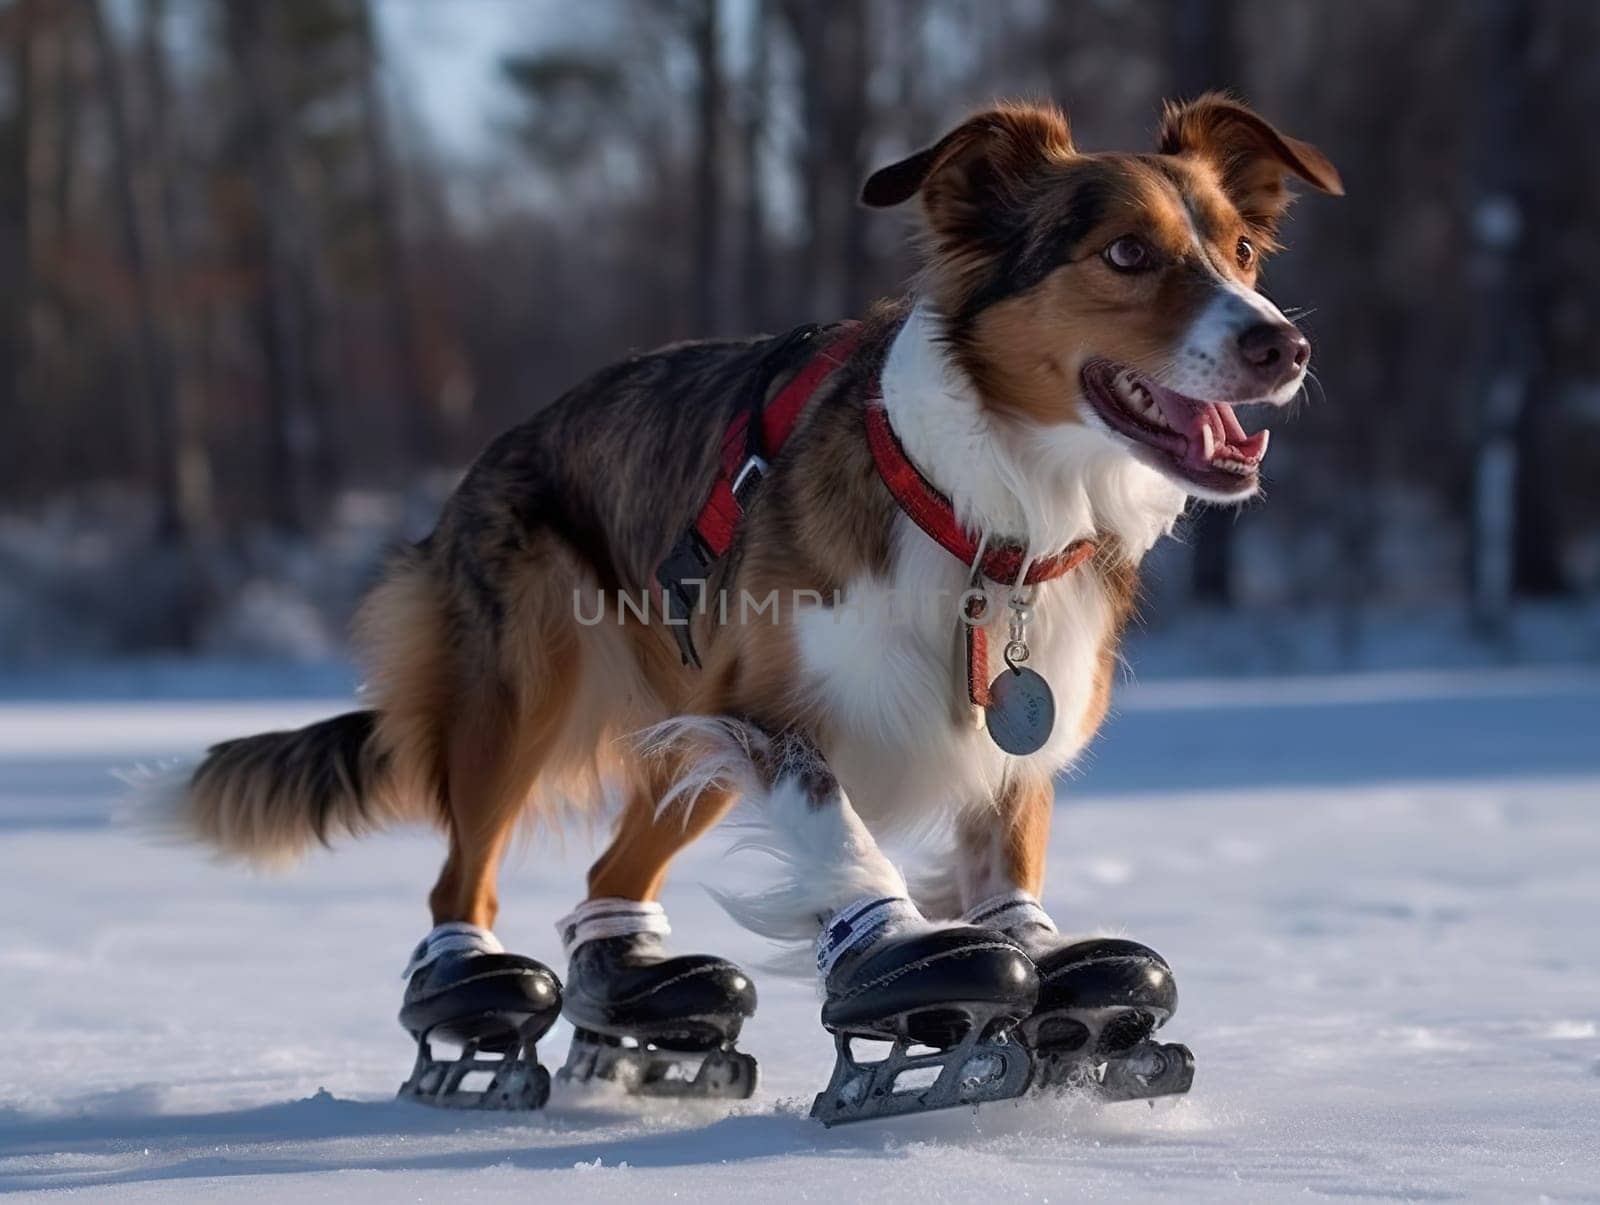 Dog Enjoys Ice Skating by GekaSkr